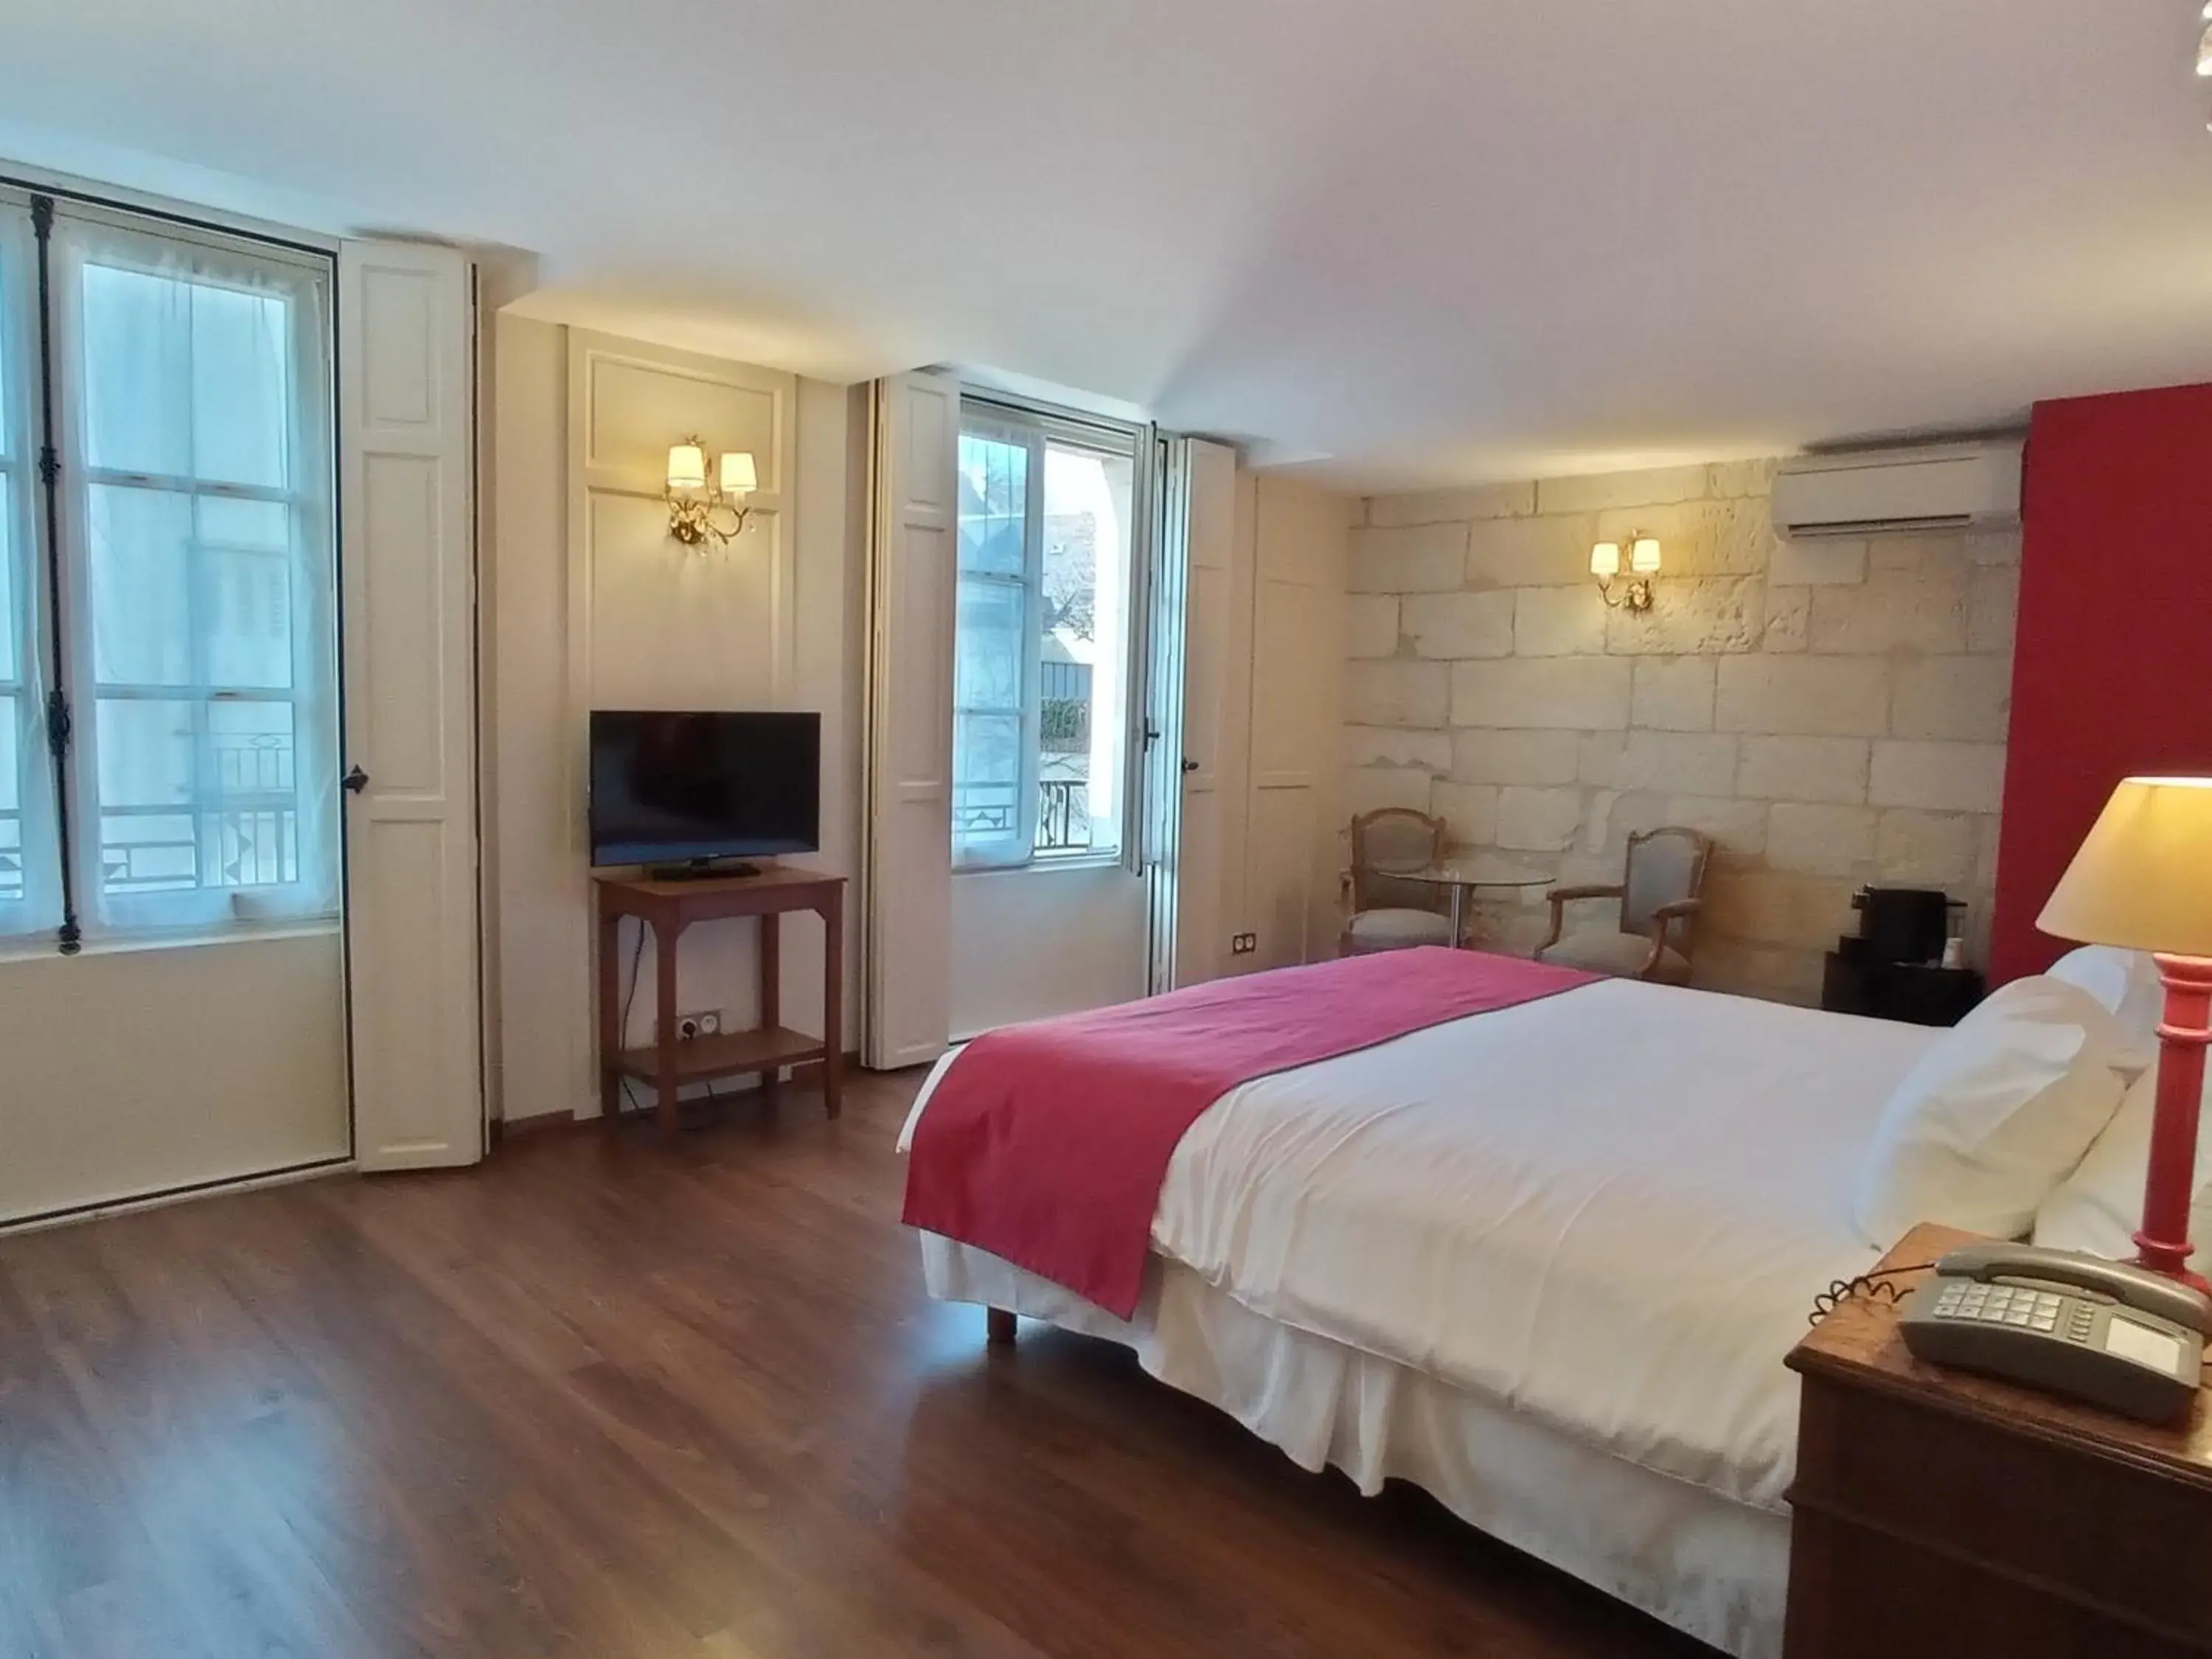 Bedroom in Hôtel Grand Monarque